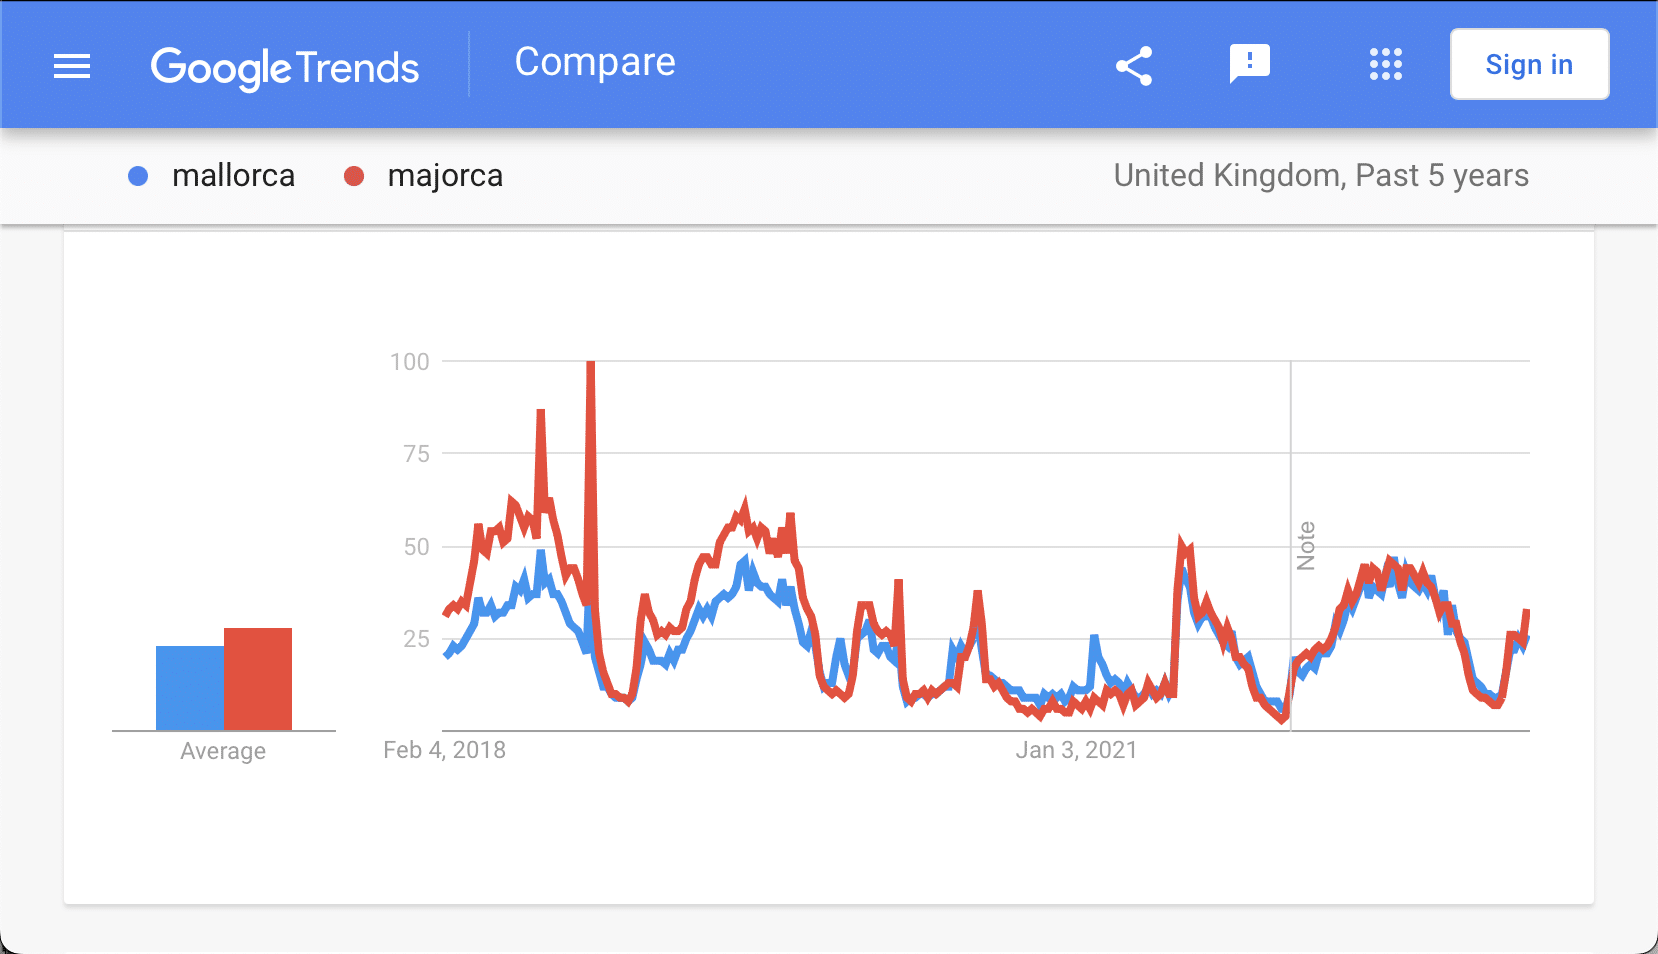 2. Google Trends mallorca vs majorca UK past 5 years